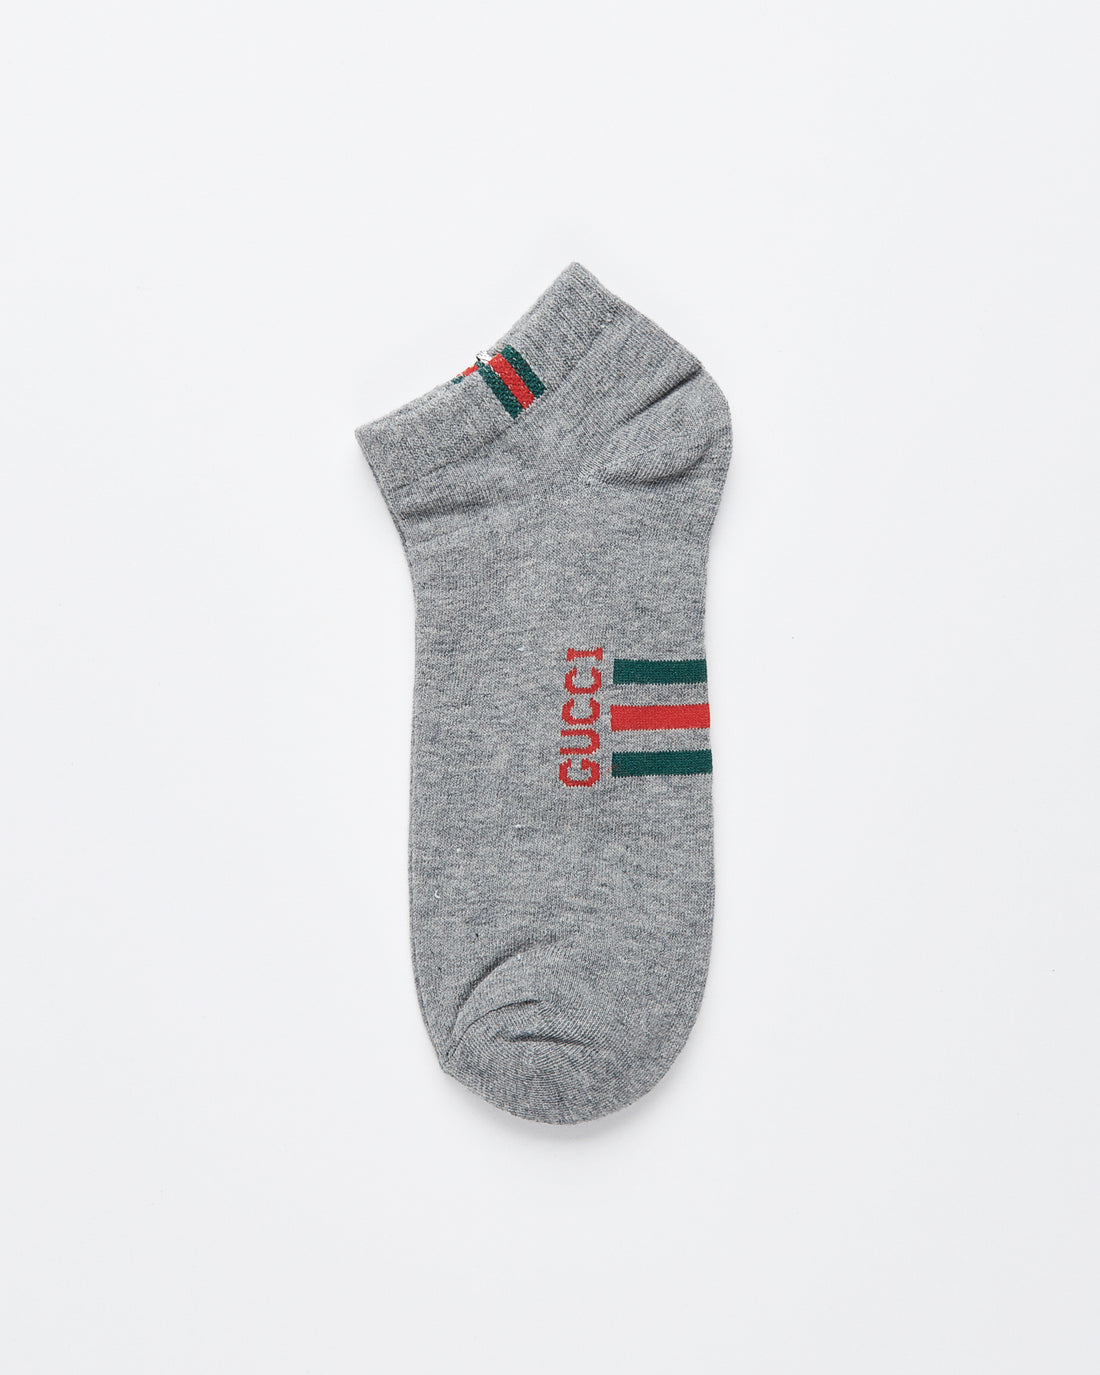 GUC Grey Low Cut 1 Pairs Socks 1.90